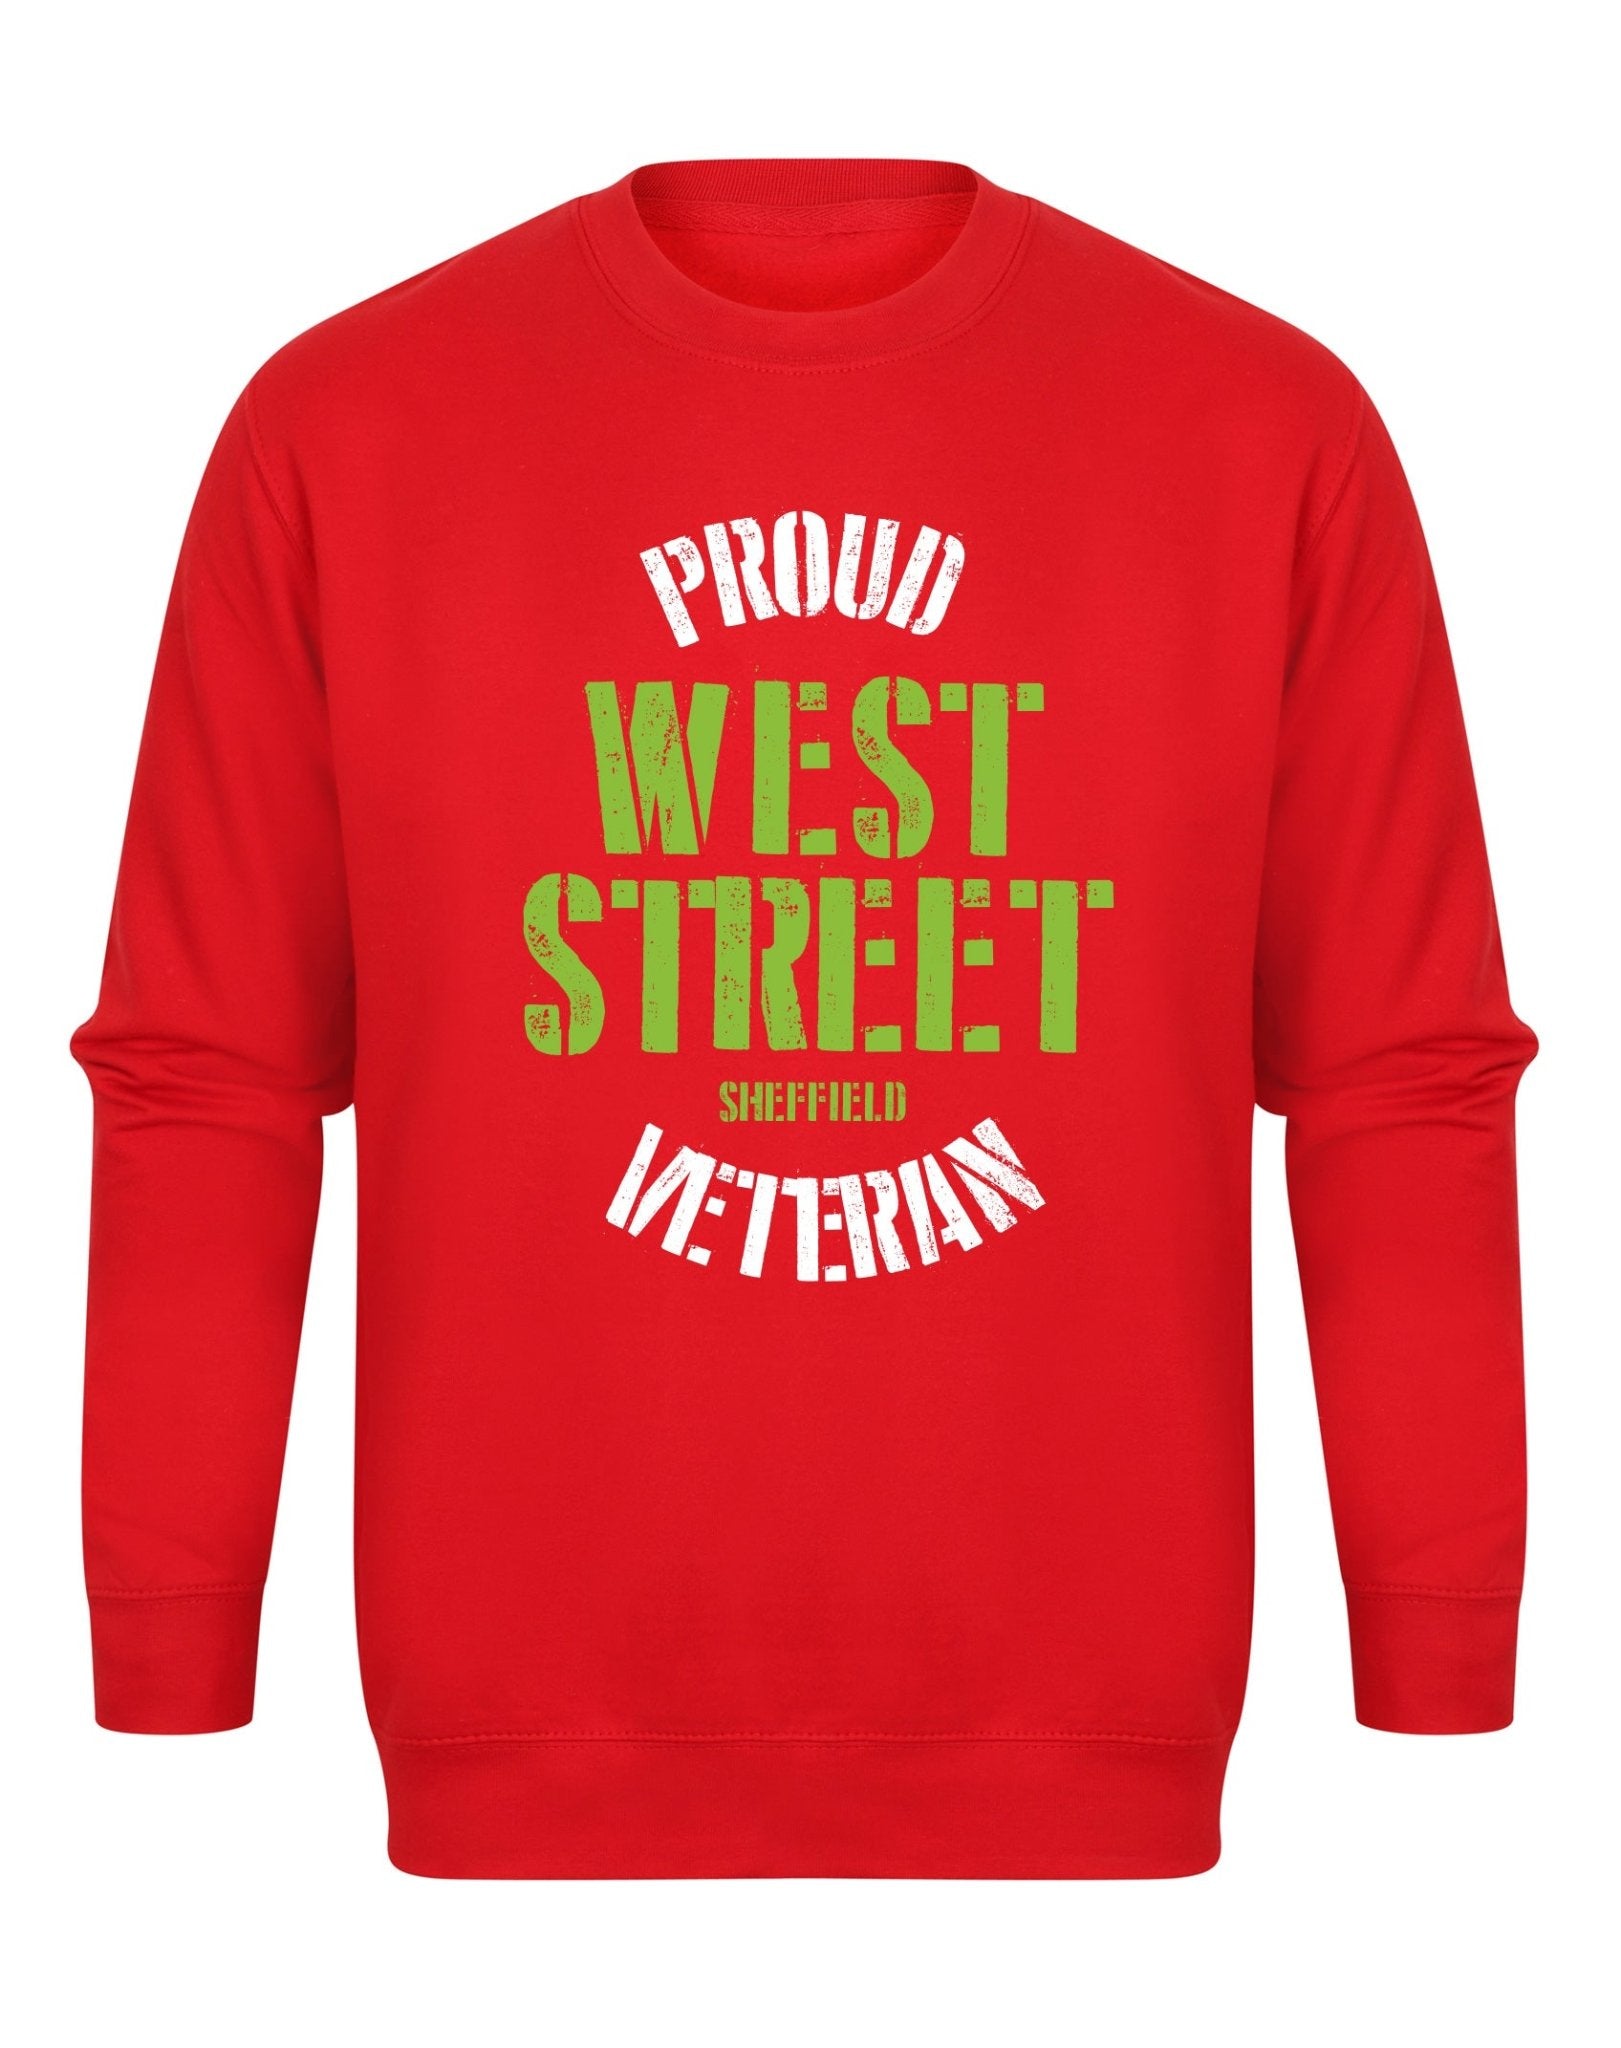 West Street Veteran unisex fit sweatshirt - various colours - Dirty Stop Outs